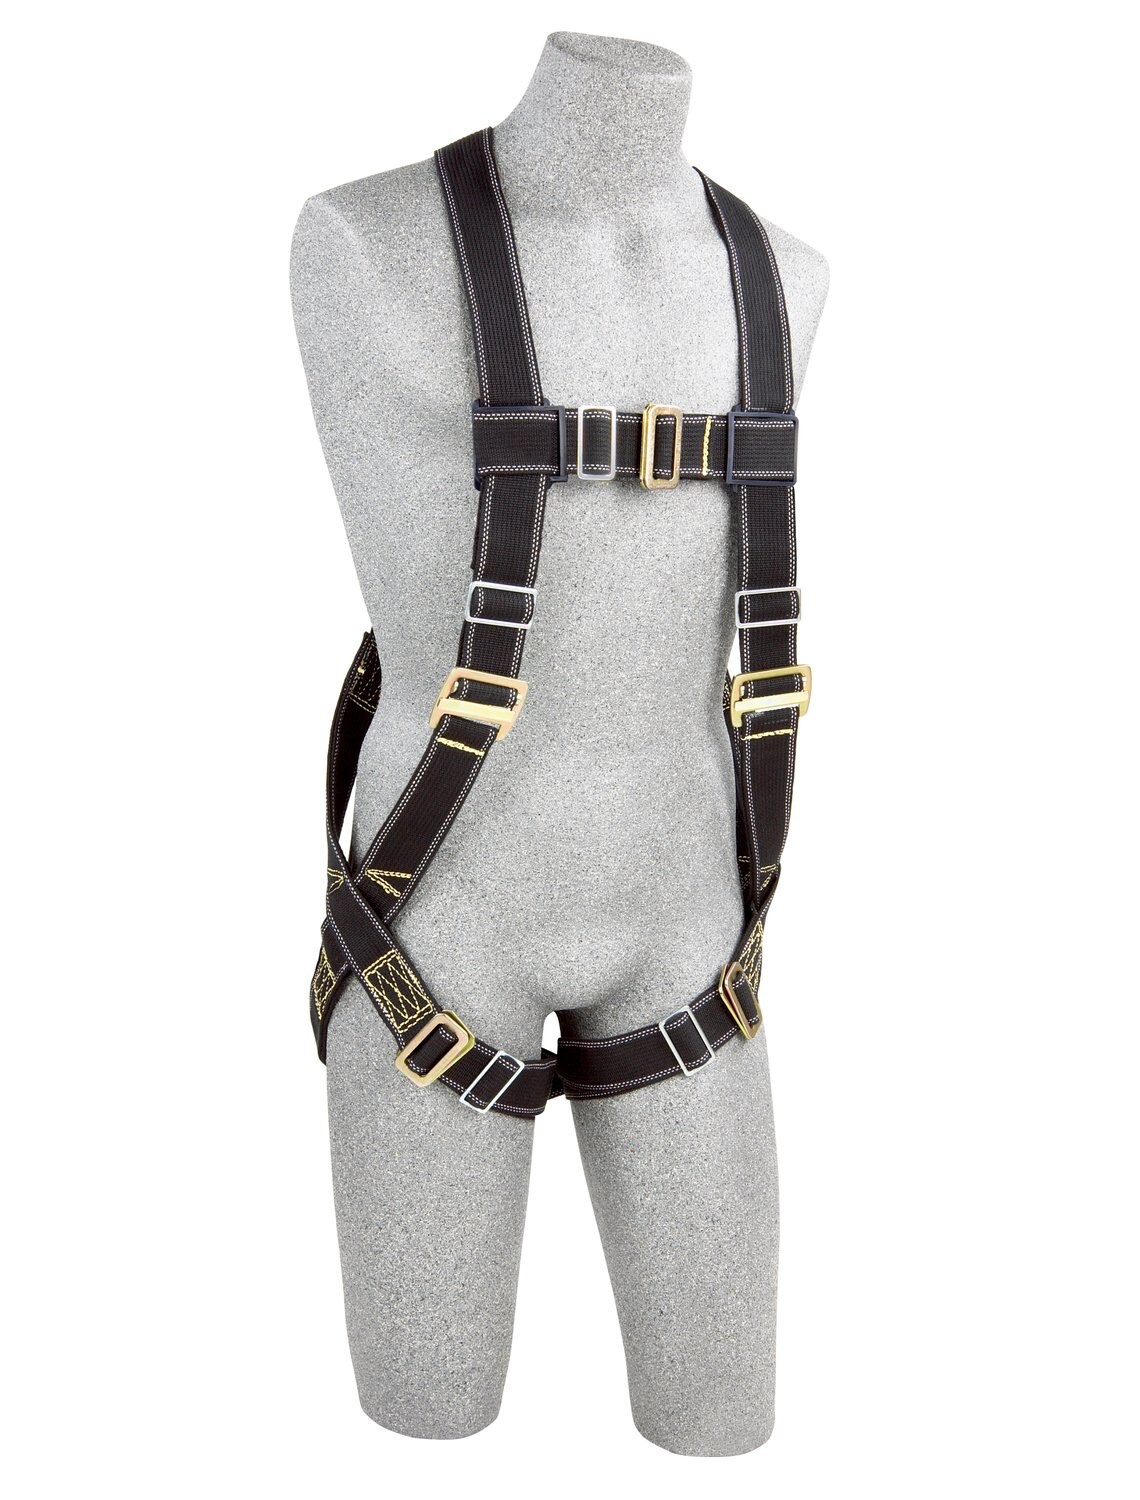 7012815474 - 3M DBI-SALA Delta Hot Work Vest Safety Harness 1104627, 2X